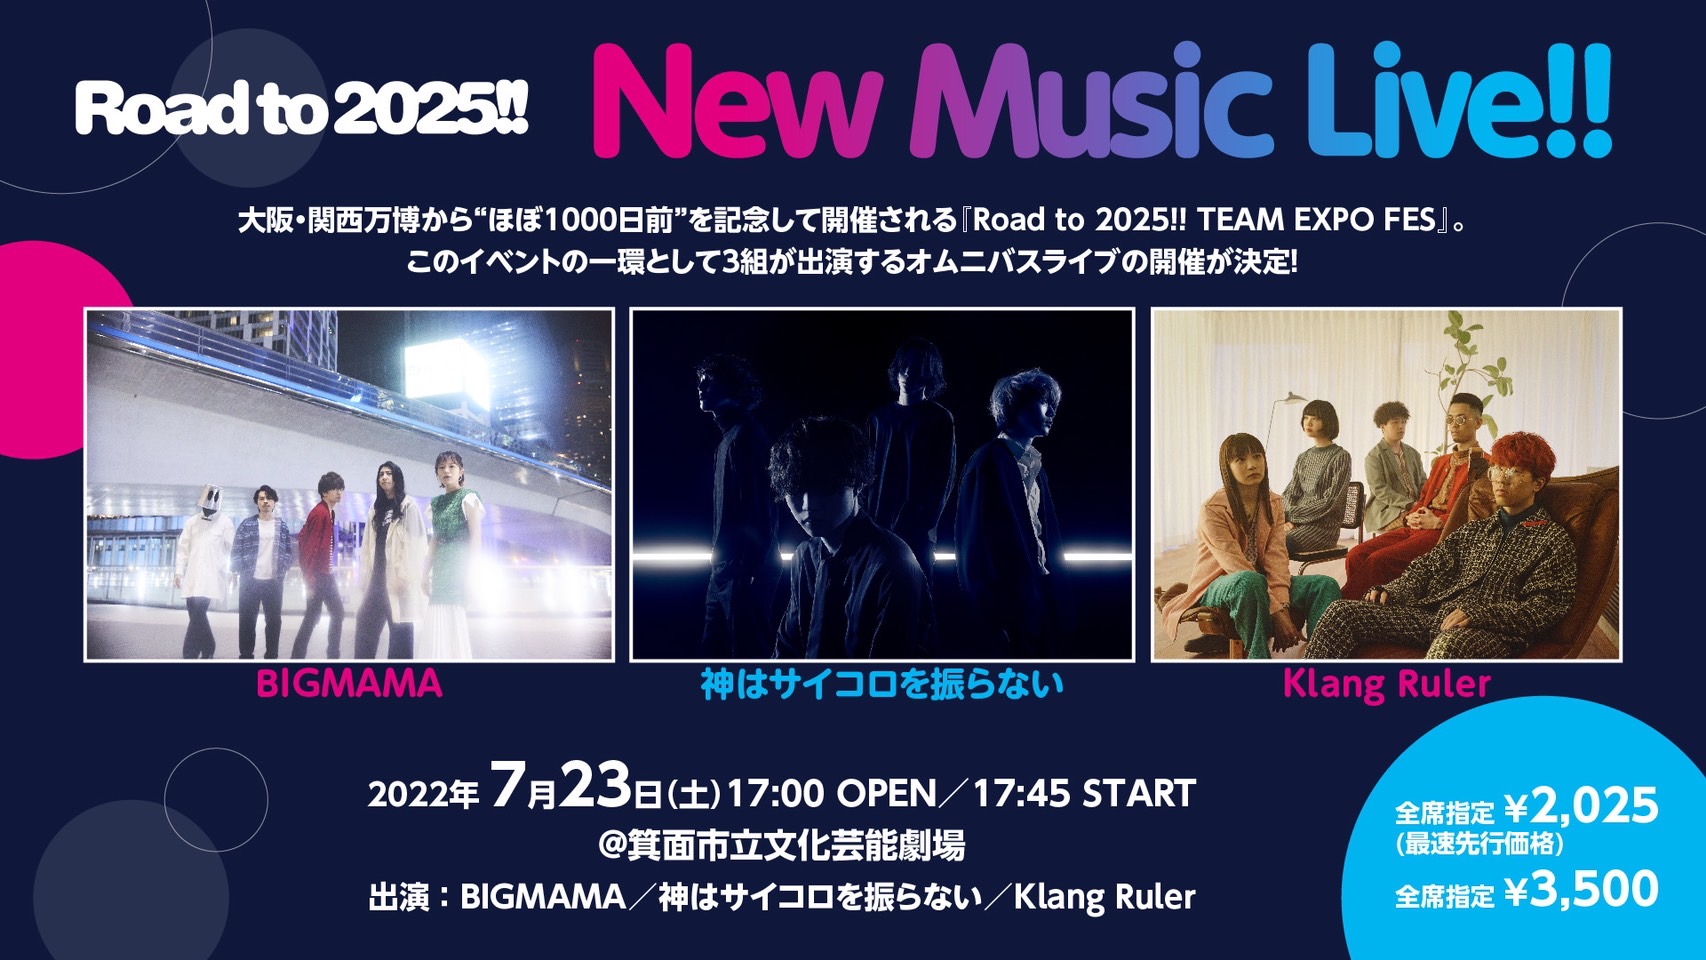 Road to 2025!! New Music Live!!【Klang Ruler】